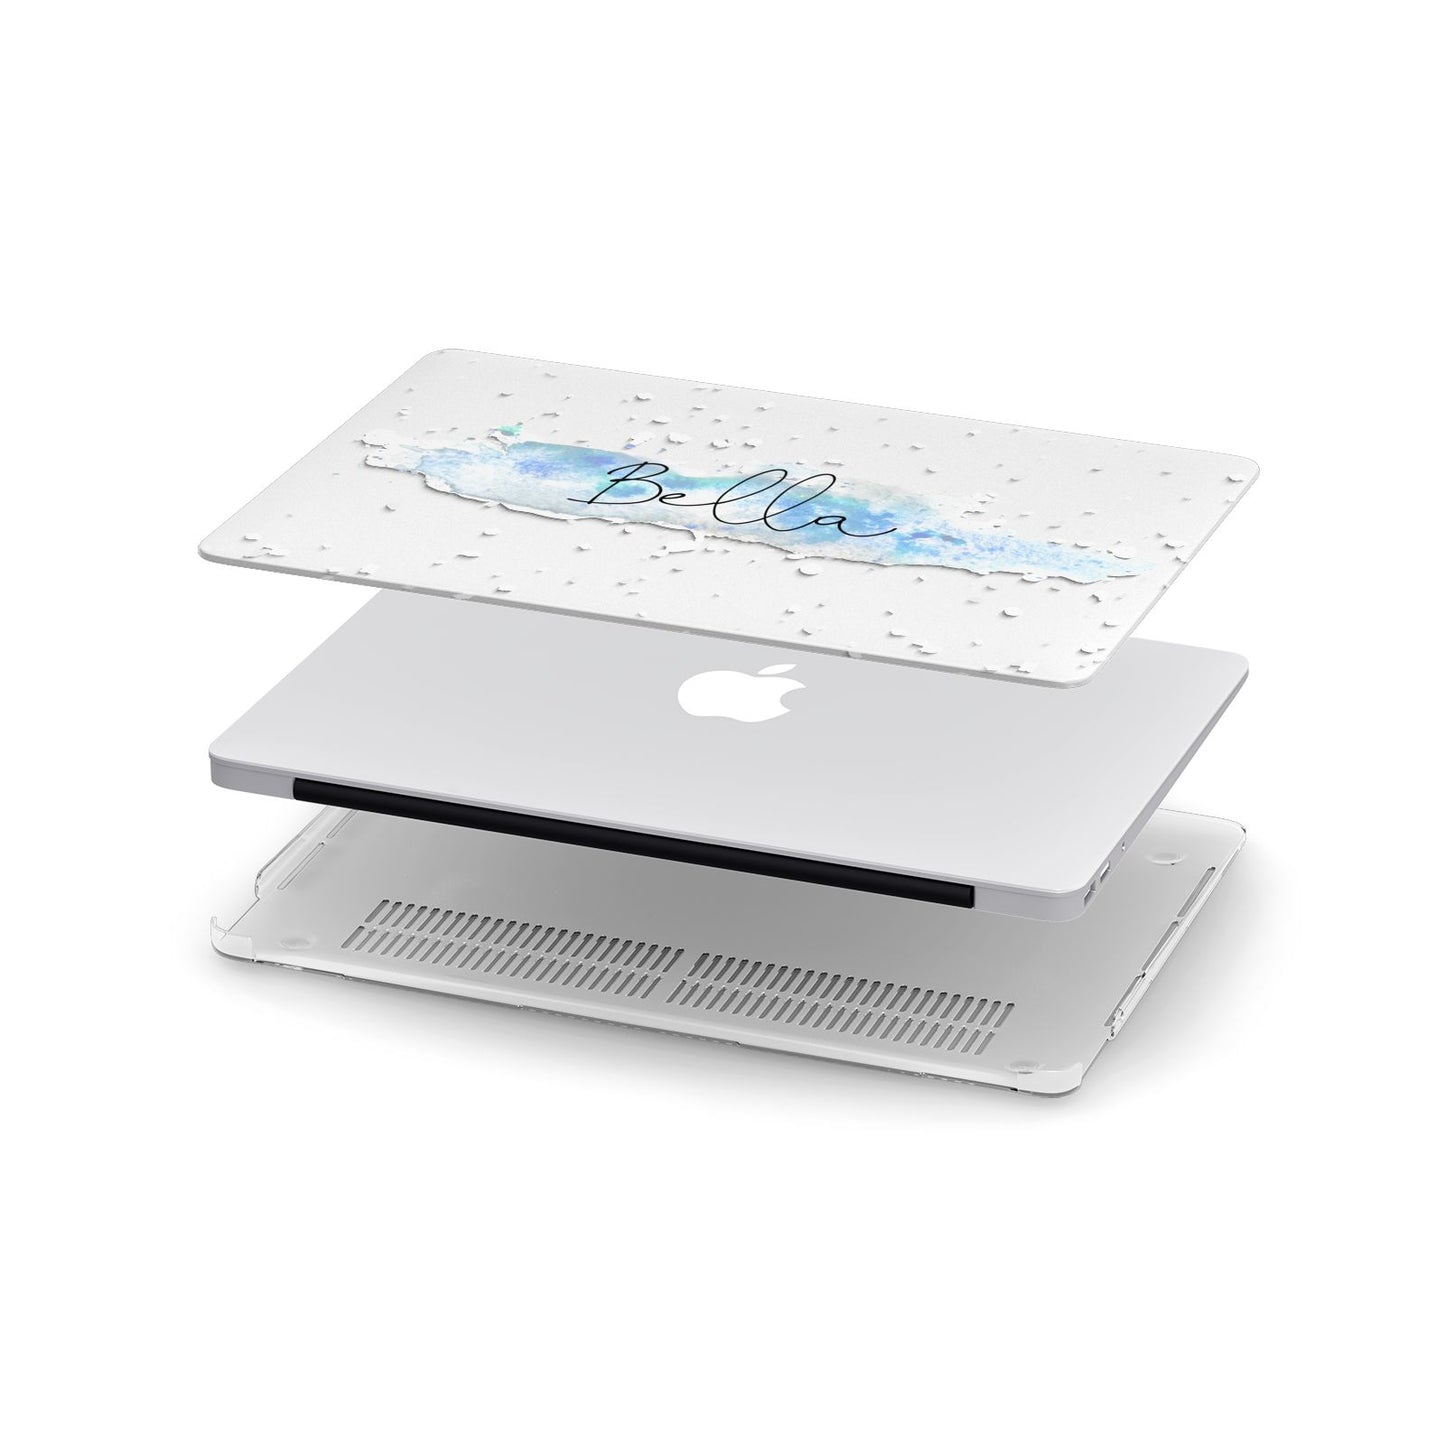 Personalised Christmas Snow fall Apple MacBook Case in Detail